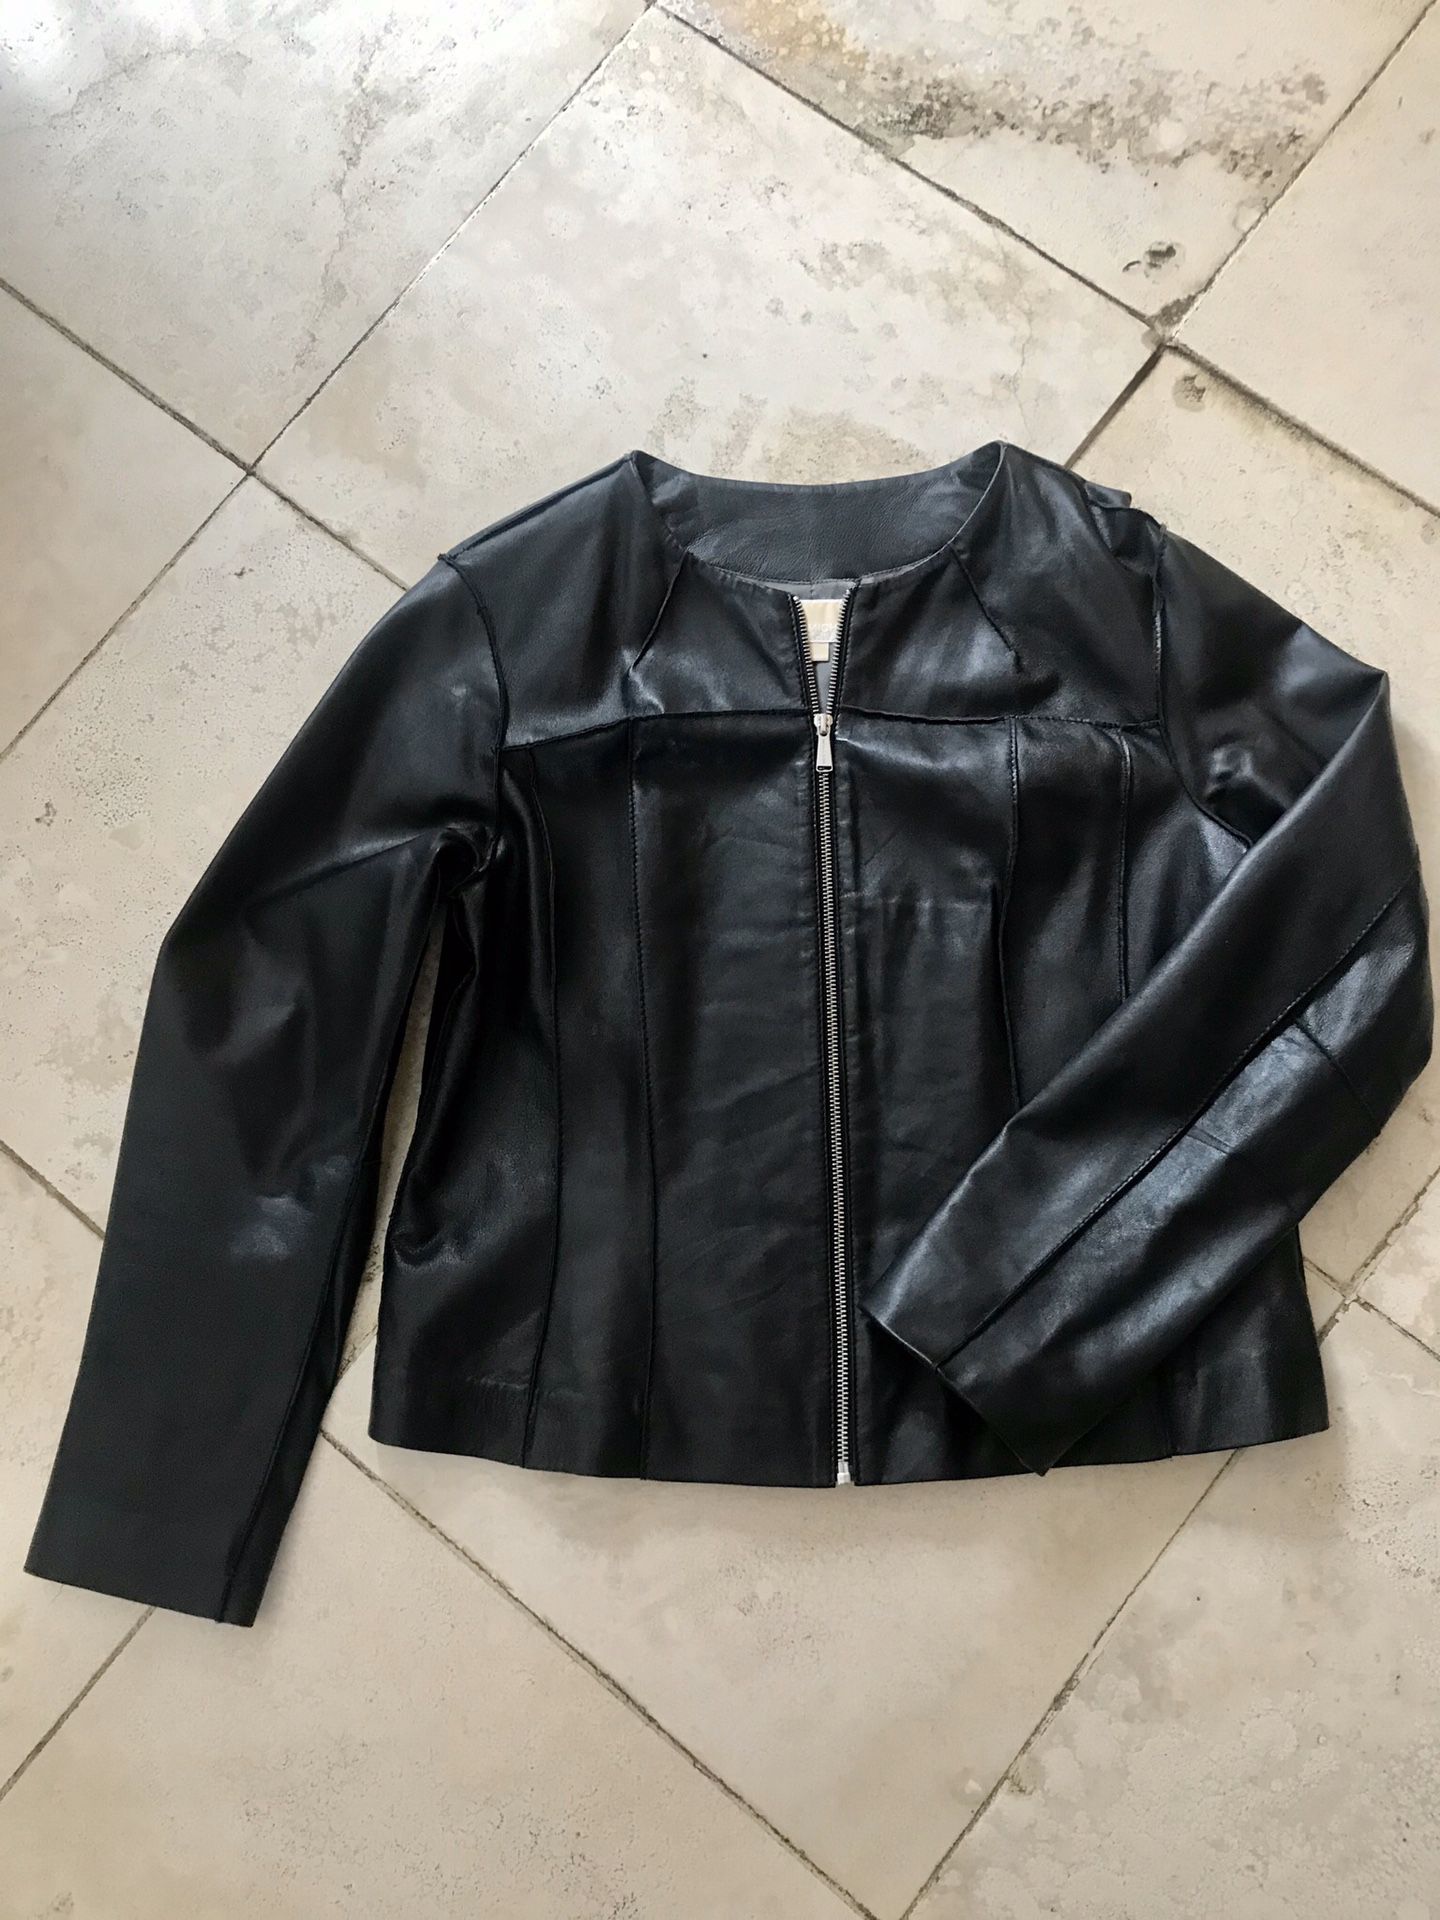 Michael’s Kors black leather jacket